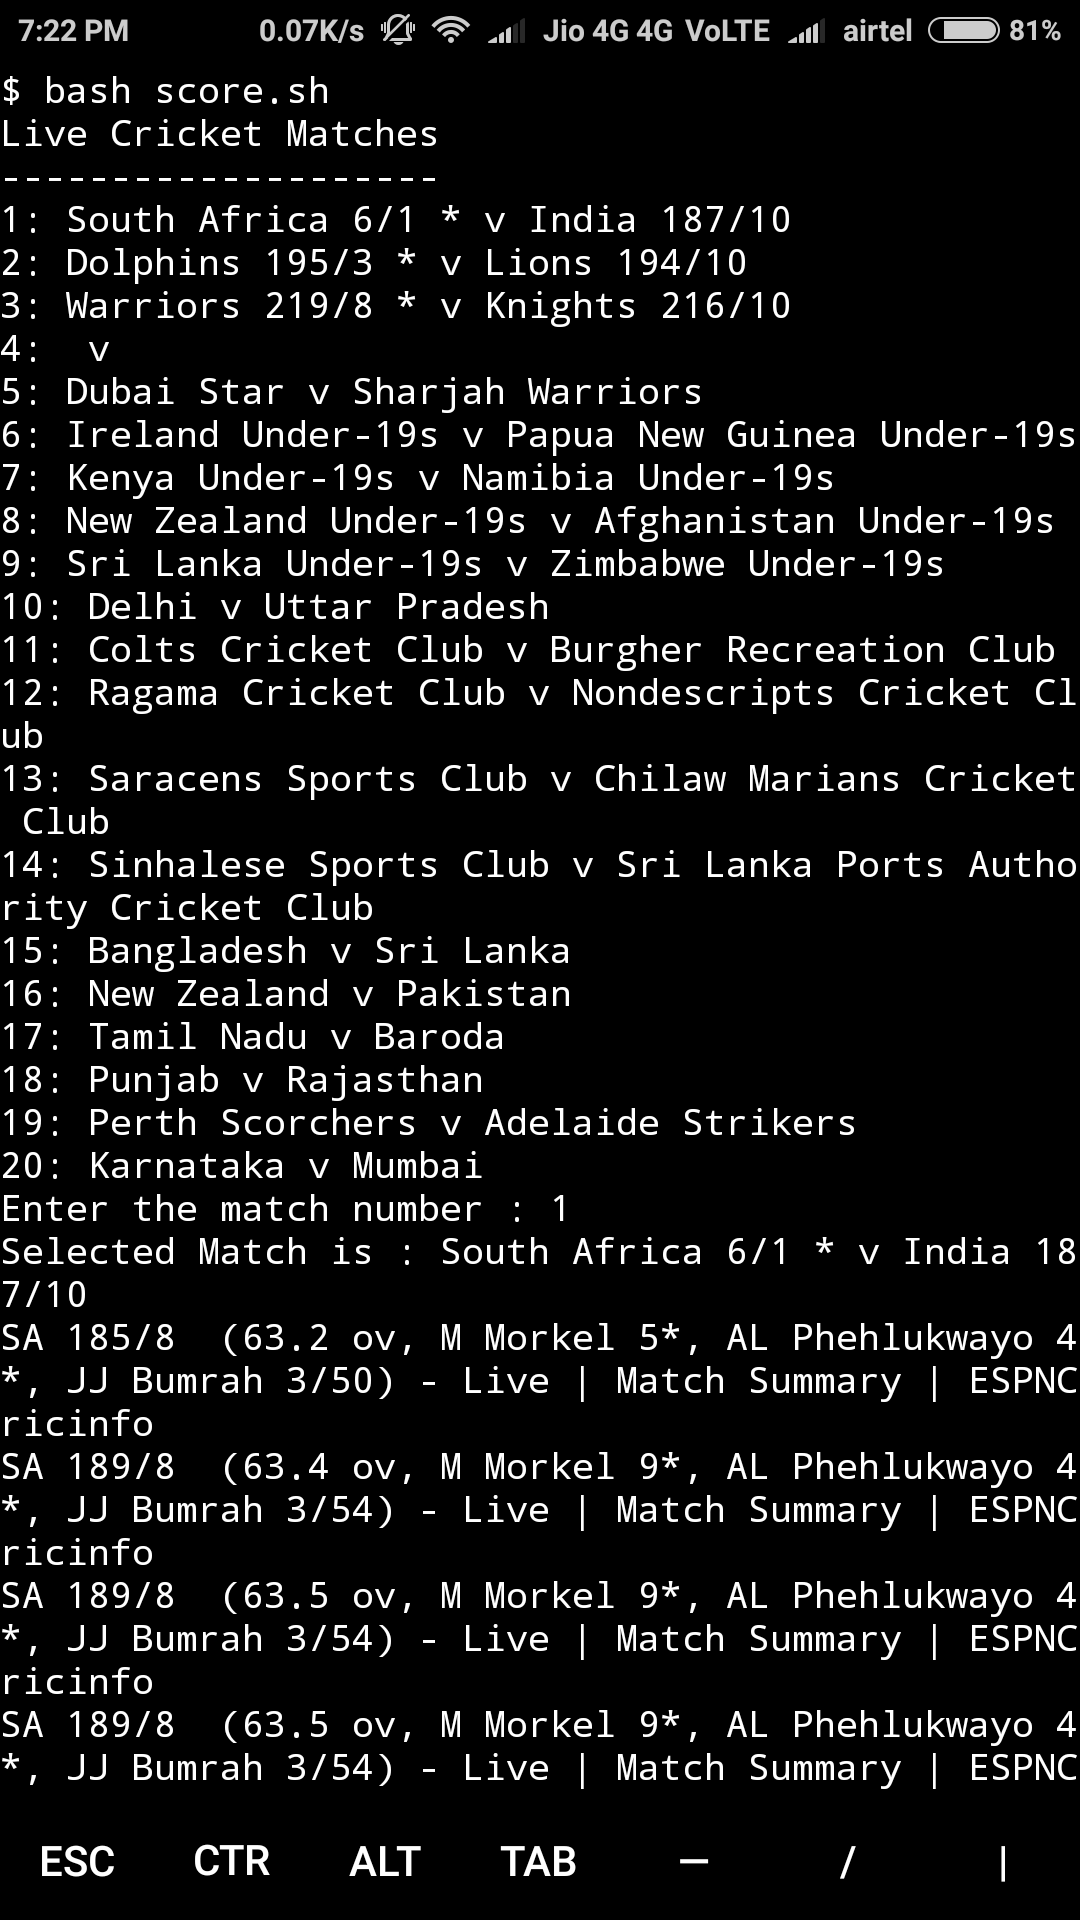 Live Cricket Score From Shell script